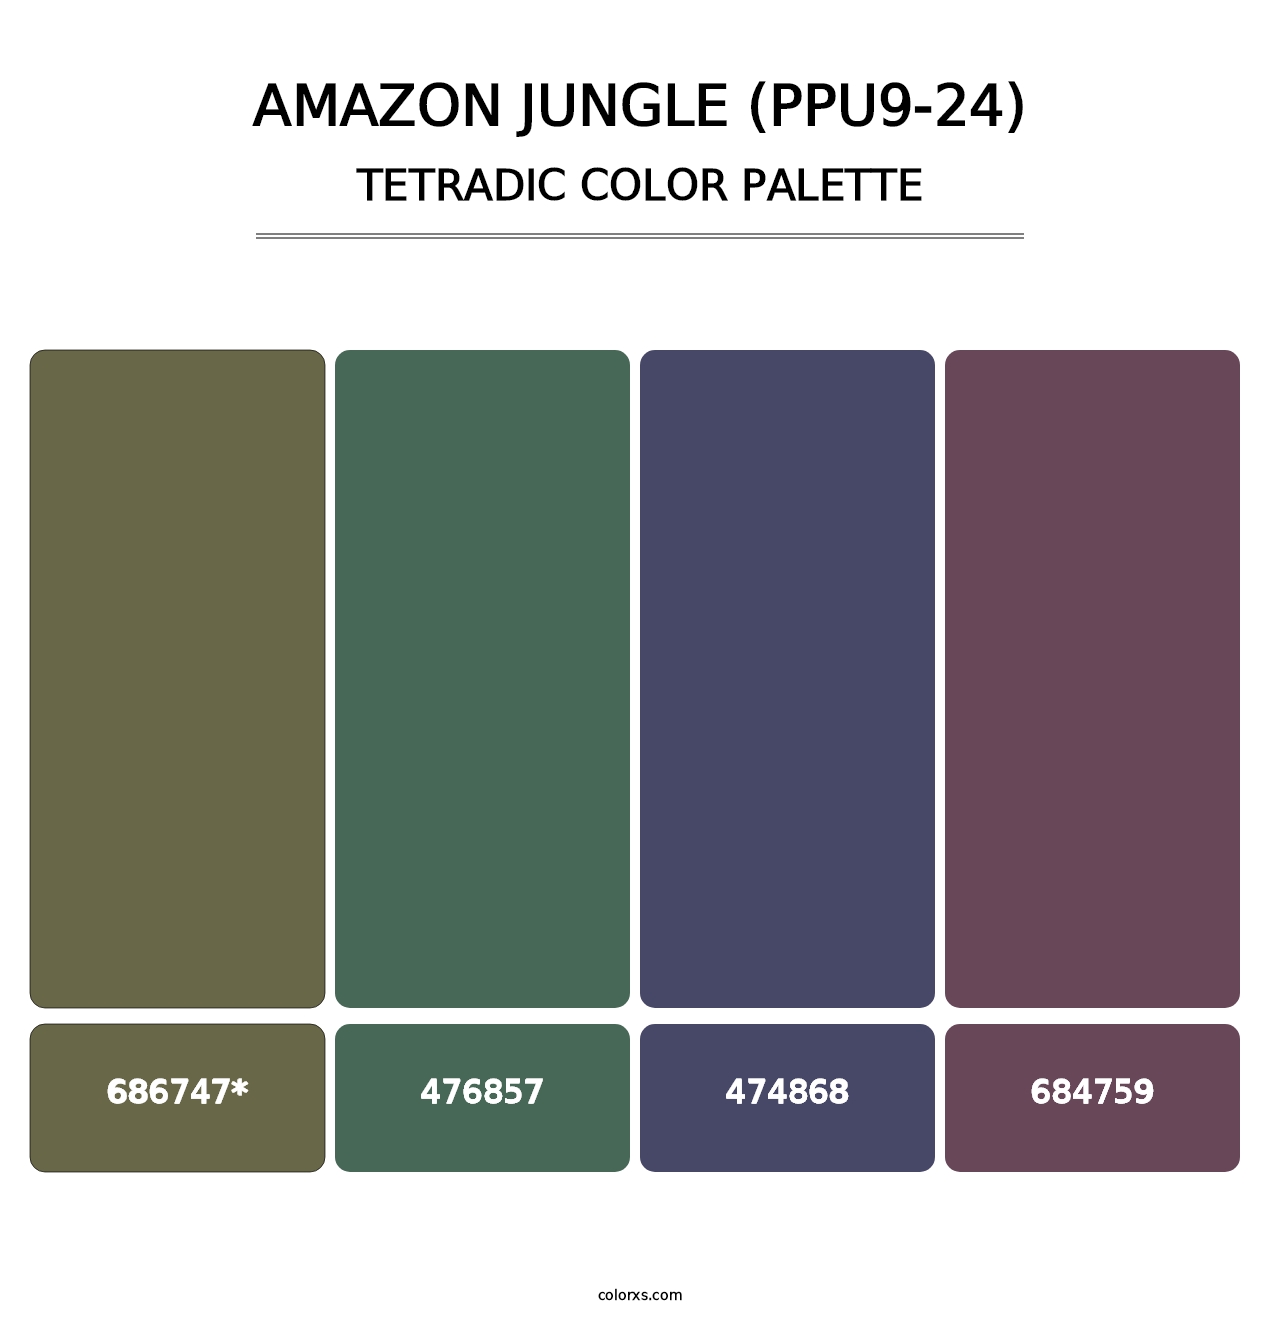 Amazon Jungle (PPU9-24) - Tetradic Color Palette